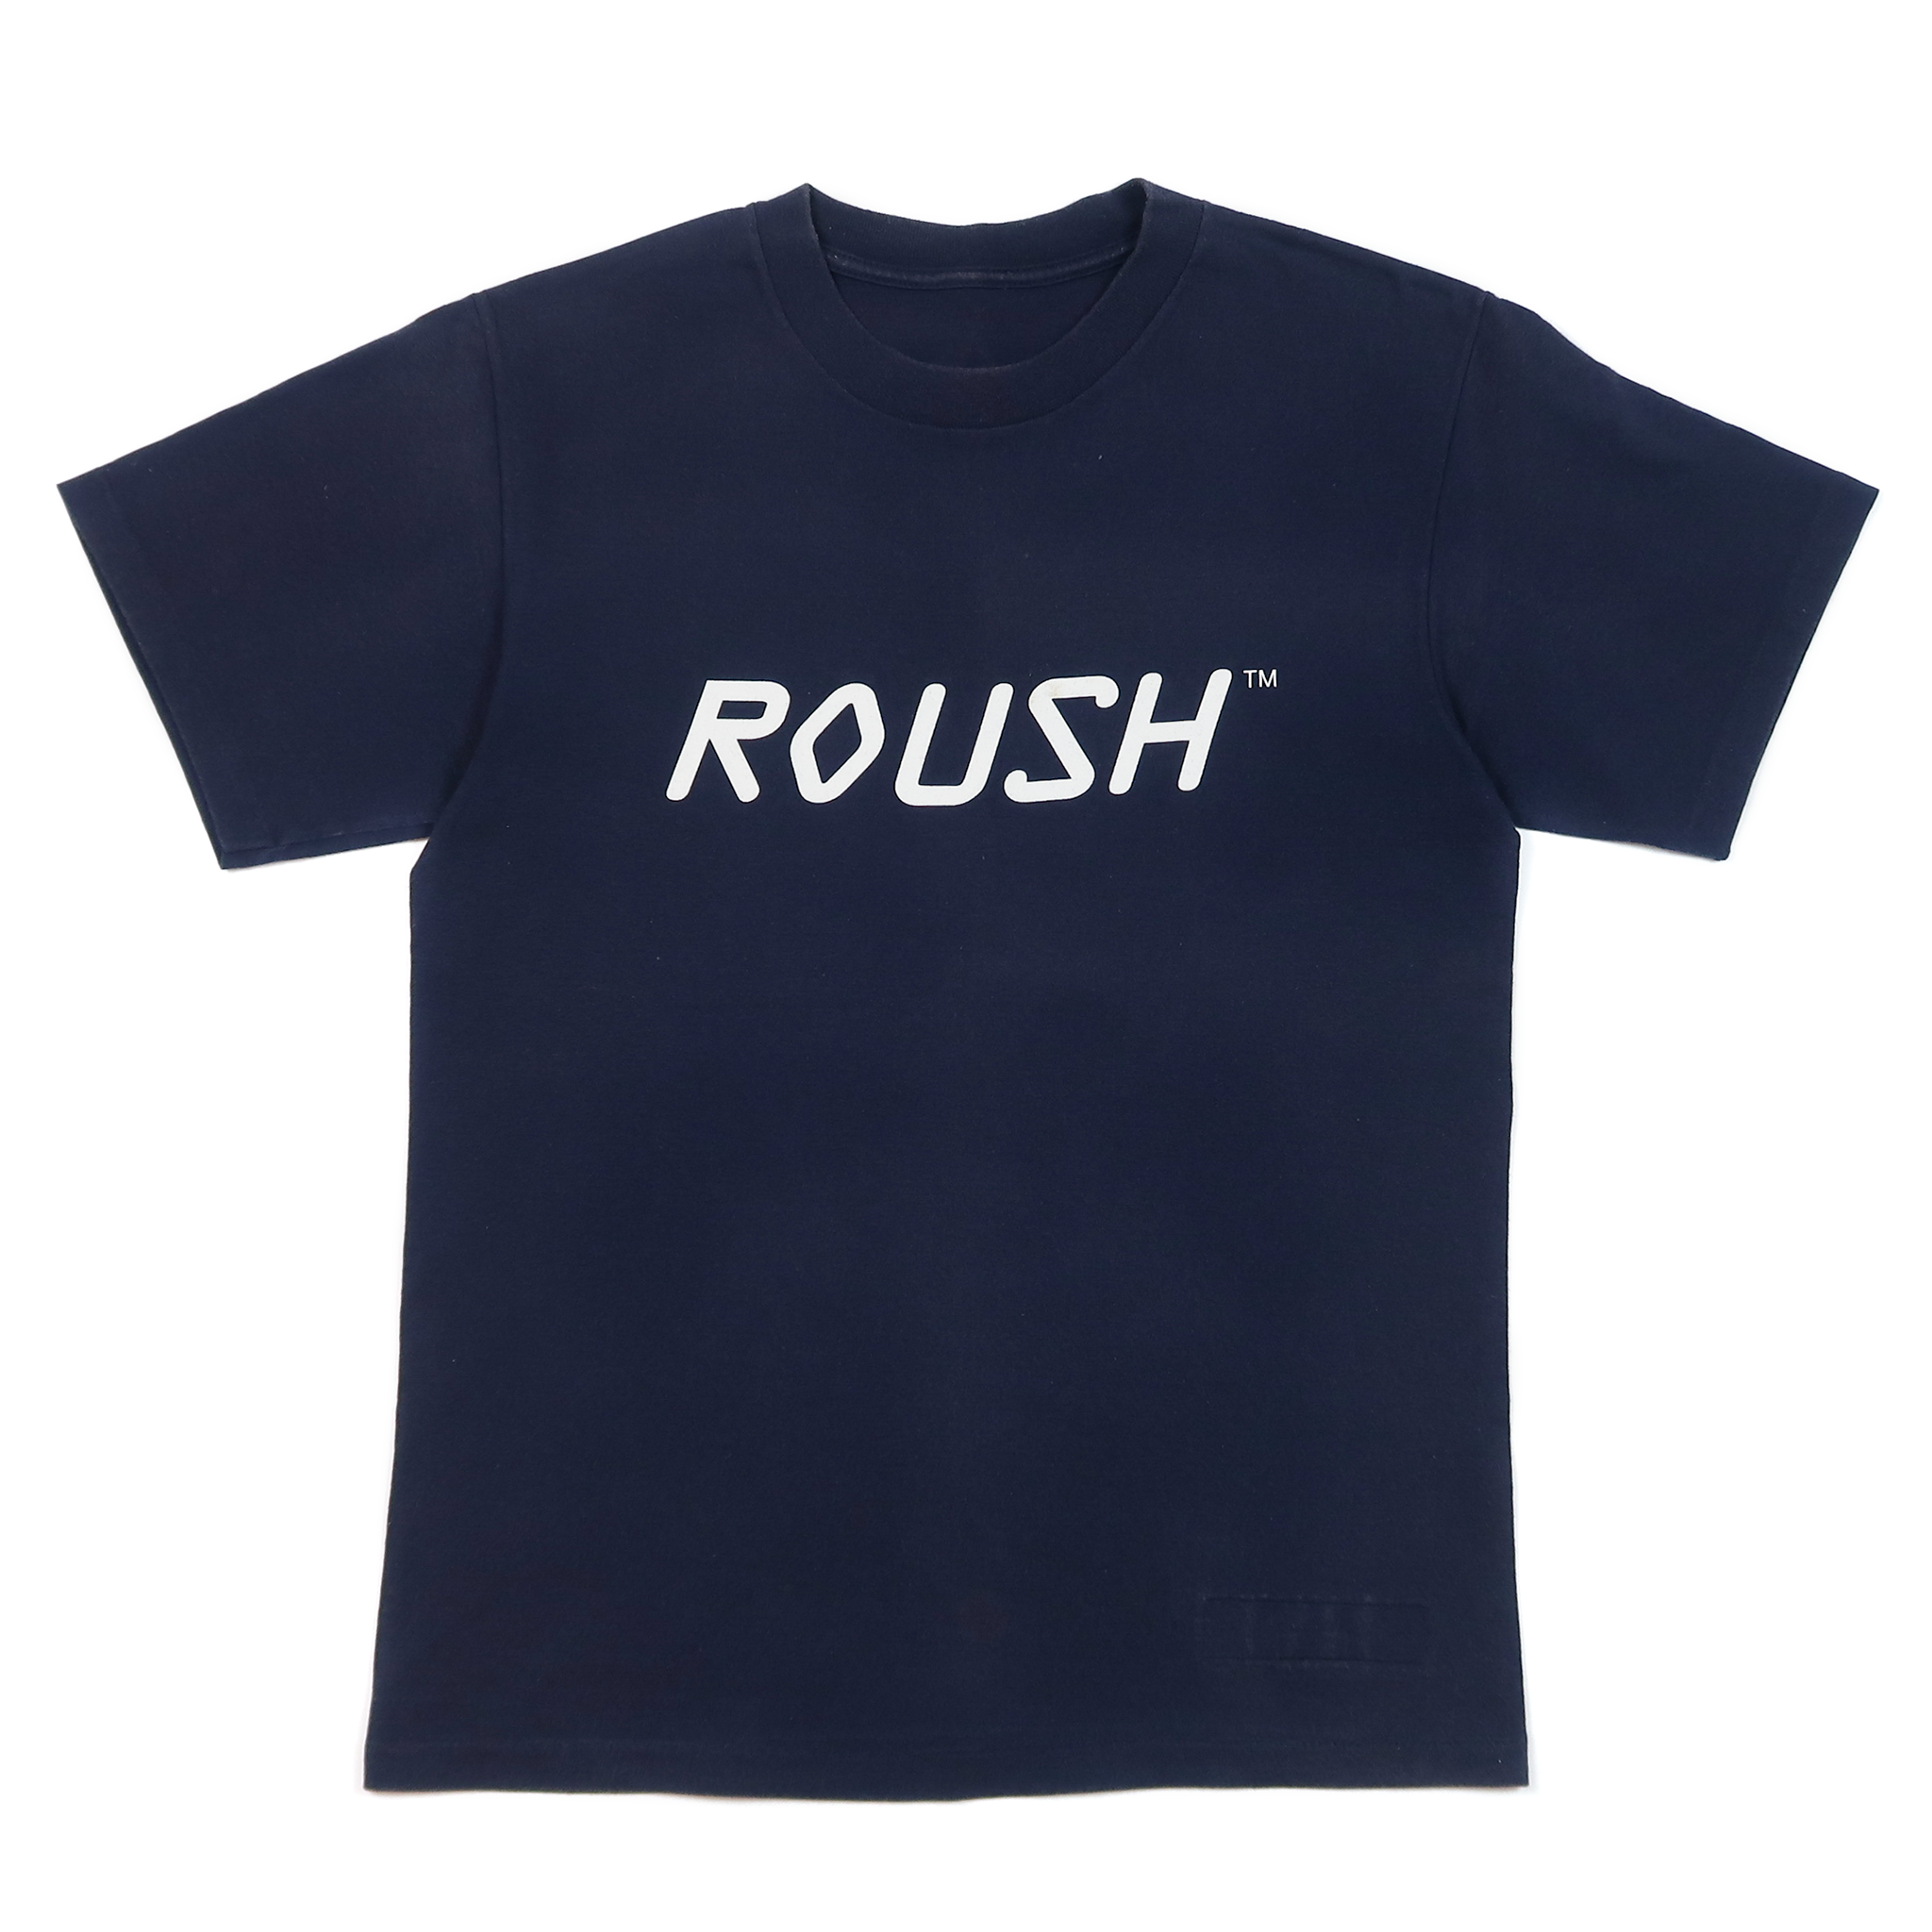 Roush Navy Vintage T-Shirt (SS 1999)